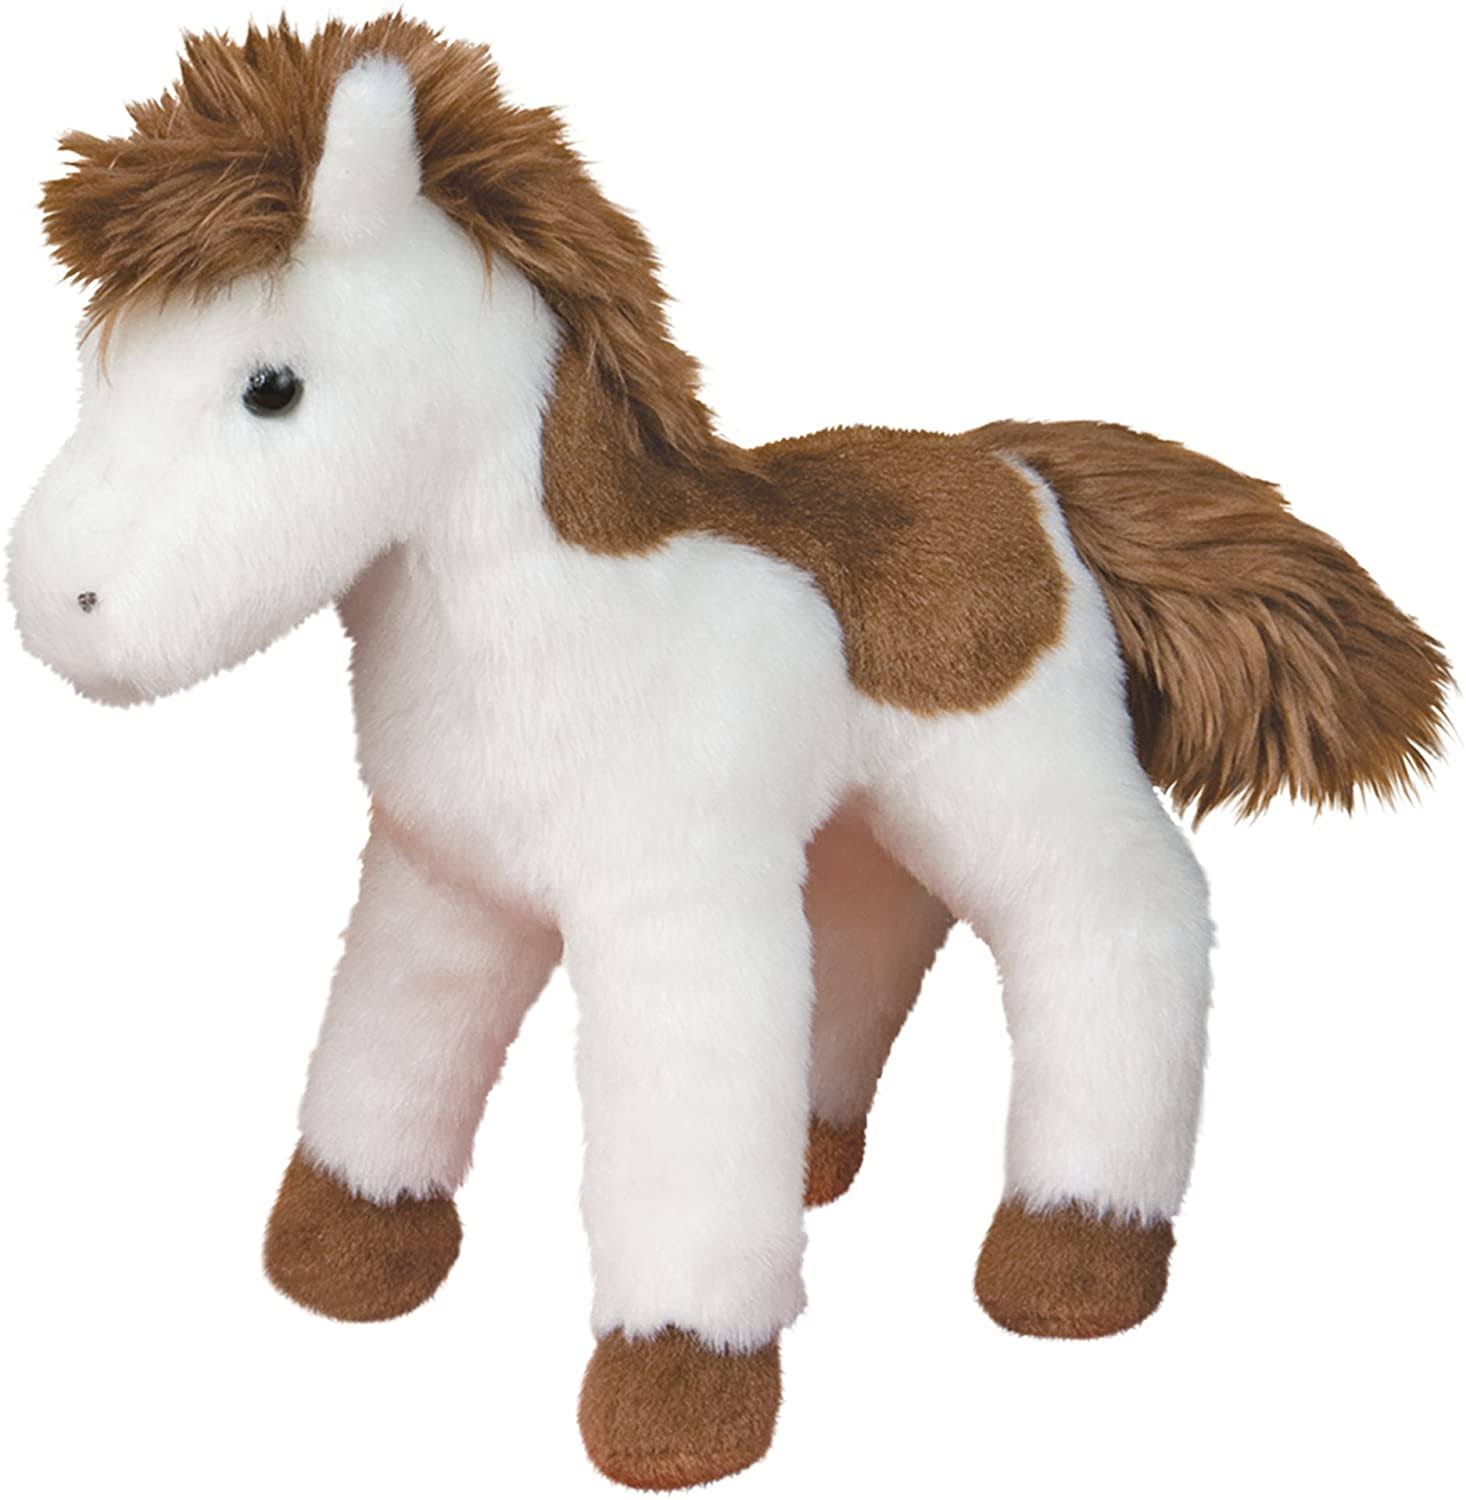 Douglas Cuddle Toys 4047 Stuffed Animal Arrow Head Paint Horse Plush Toy - Brown, 20cm